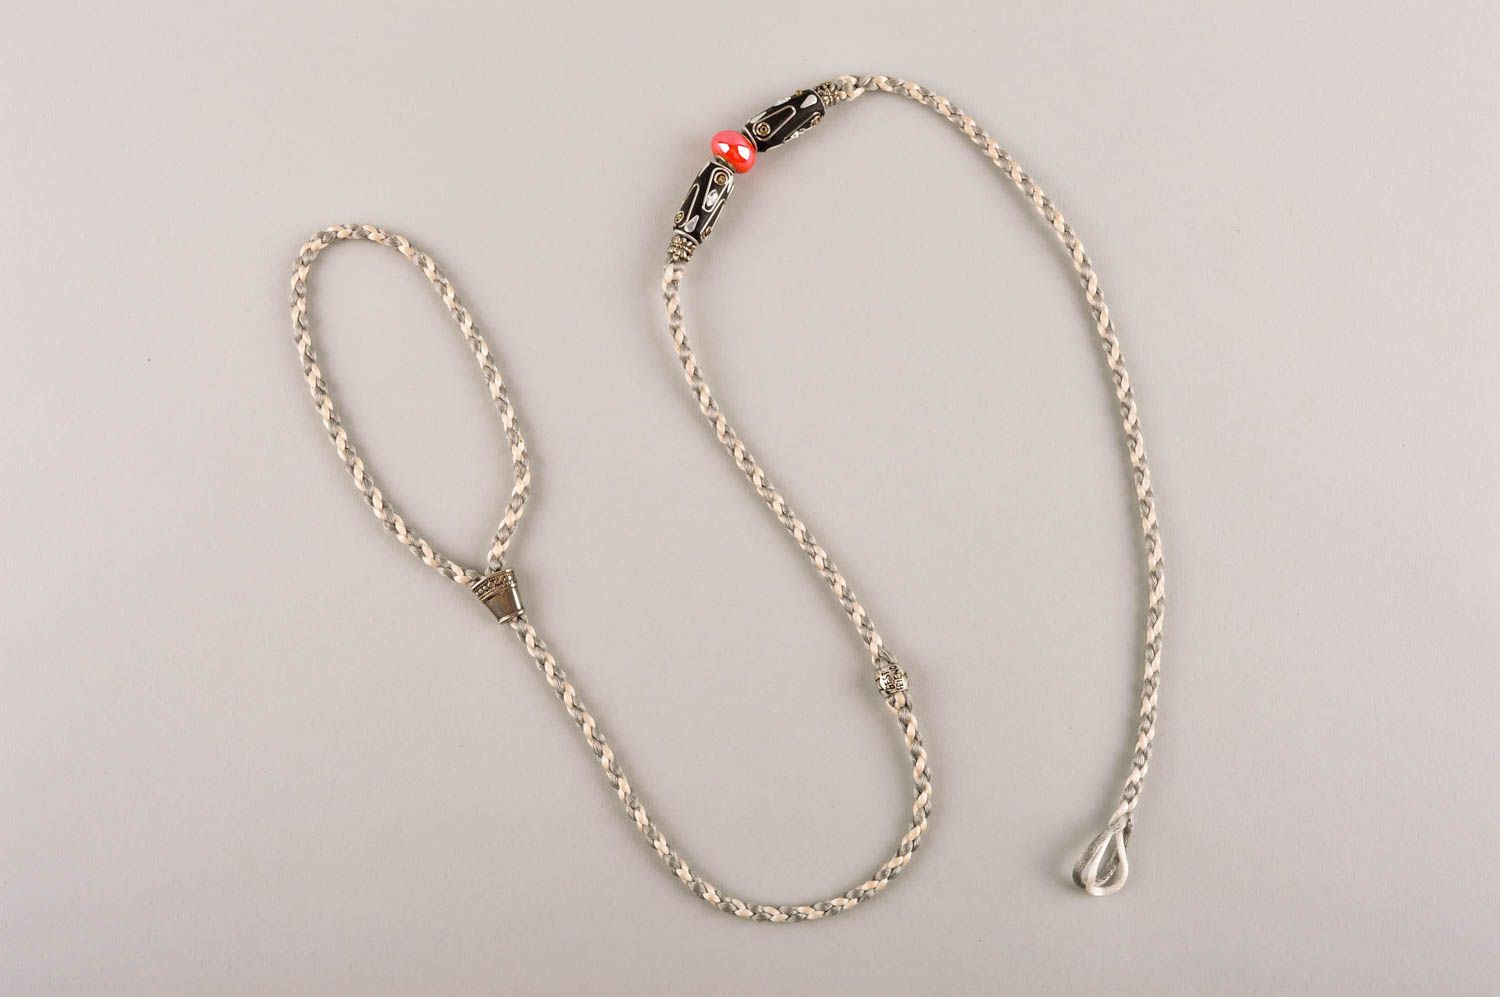 Handmade leash designer leash unusual leash for cat leash for dogs gift ideas photo 2